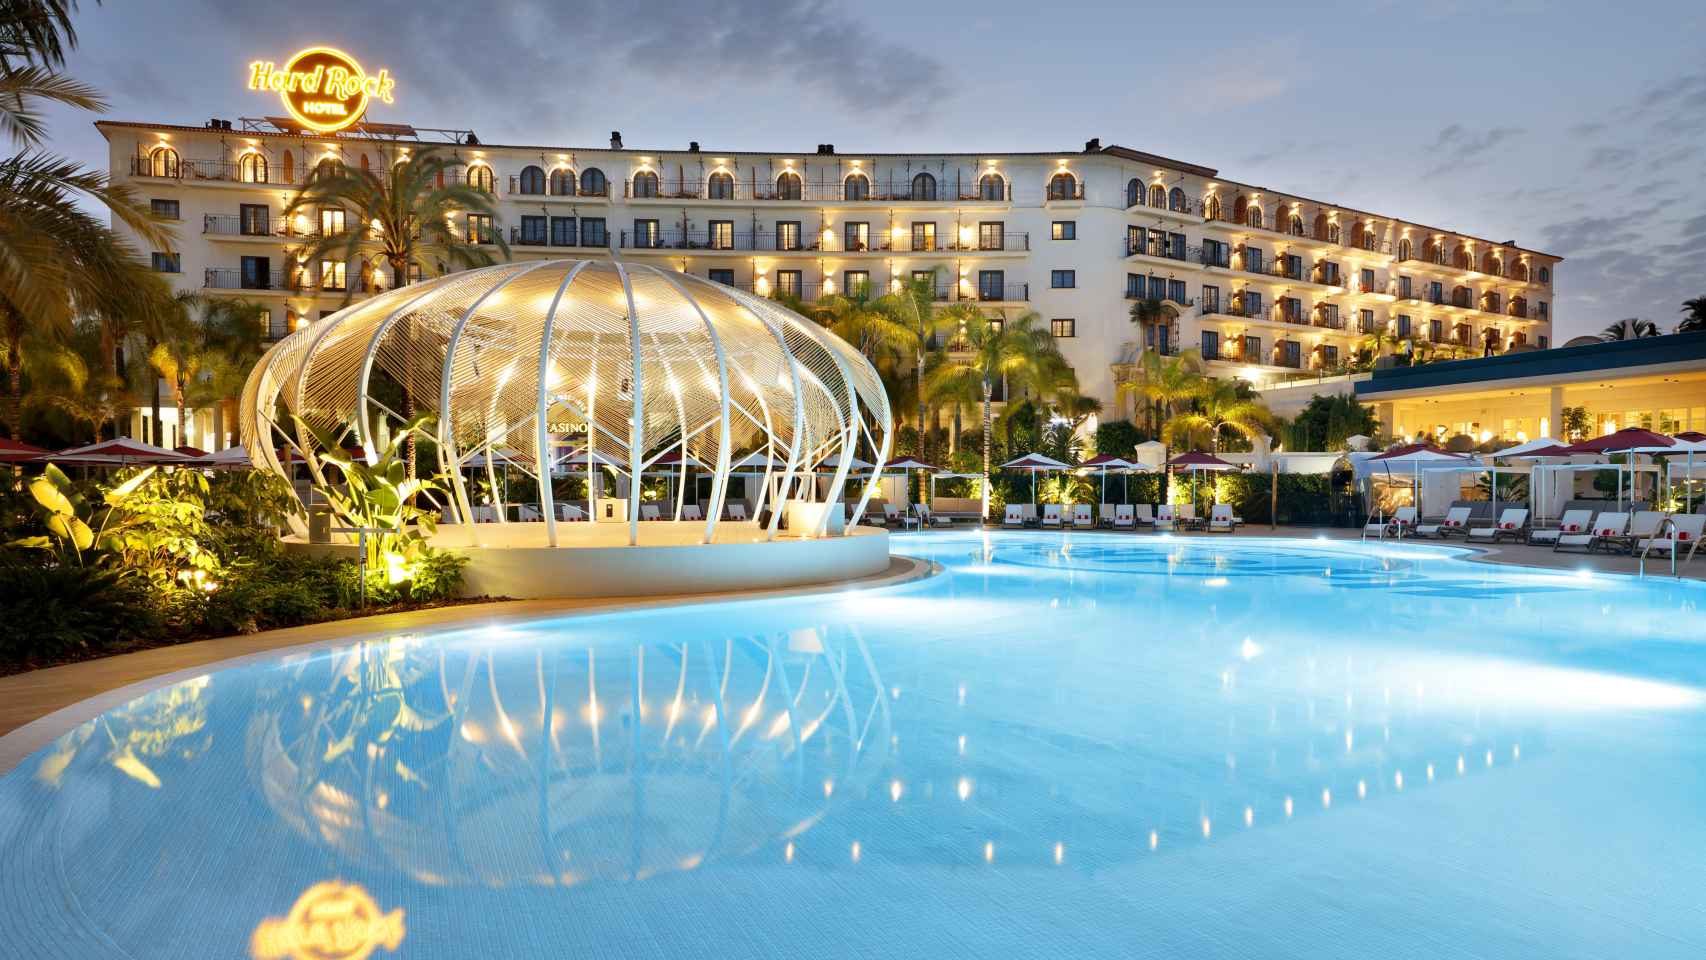 Vista nocturna del hotel Hard Rock Hotel Marbella.